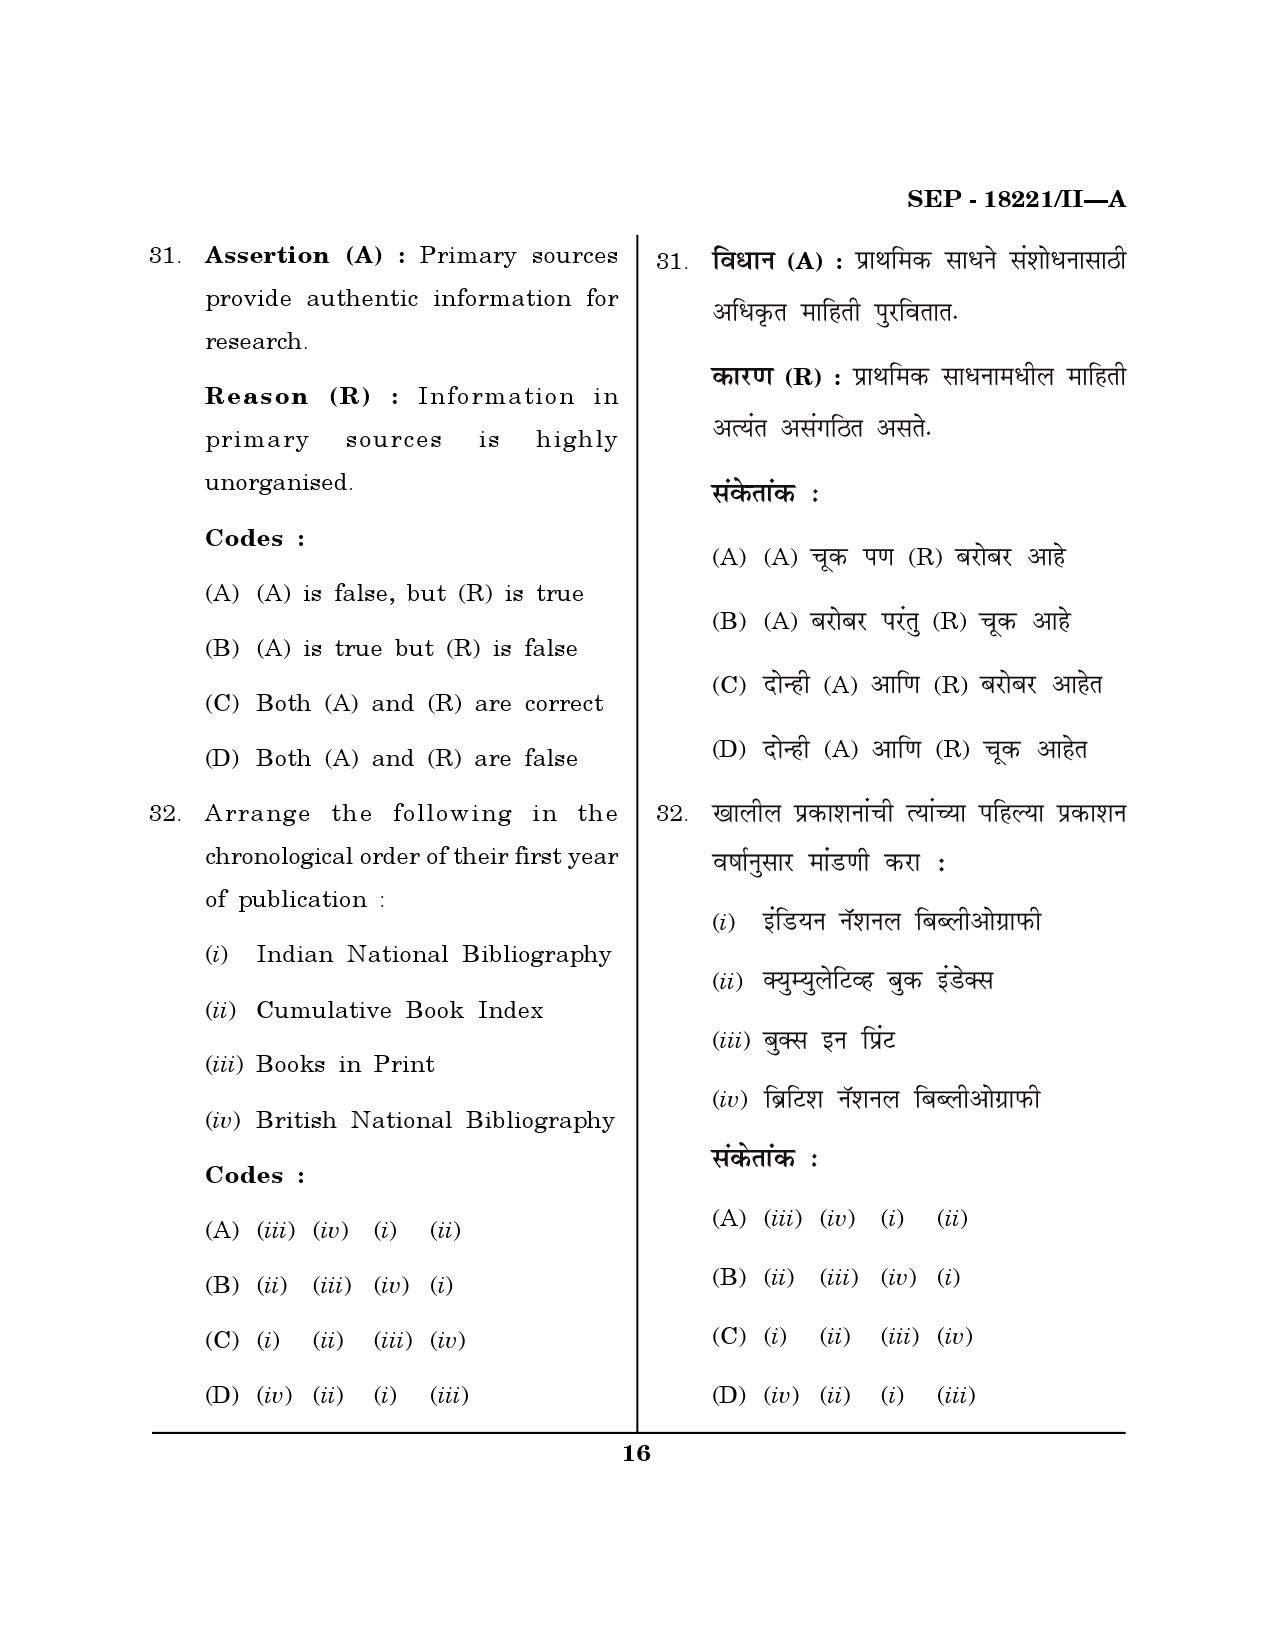 Maharashtra SET Library Information Science Exam Question Paper September 2021 15